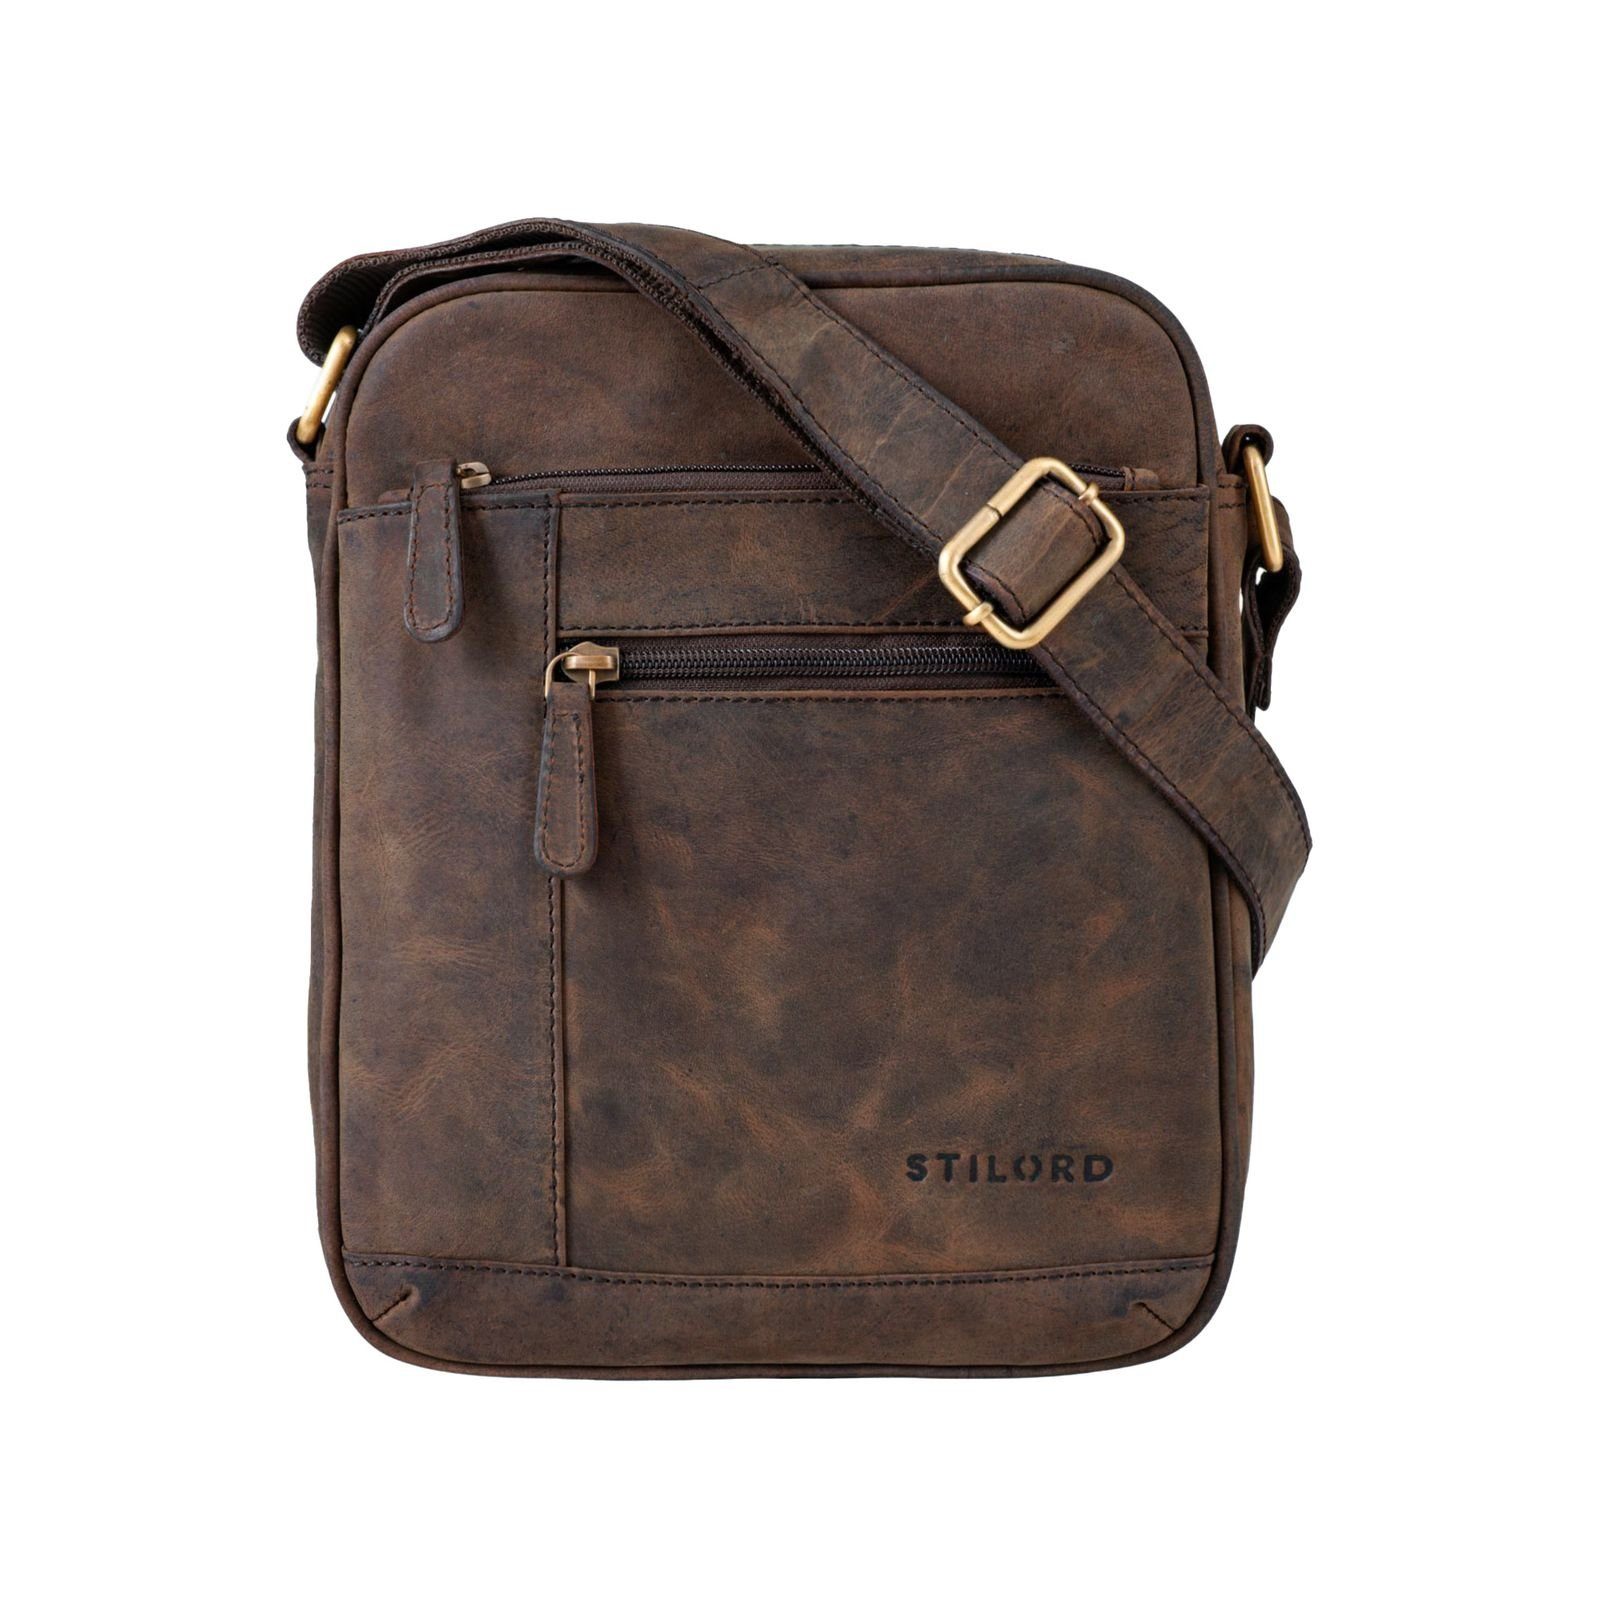 STILORD Messenger Bag "Diego" Vintage Herrentasche Leder klein zamora - braun | Messenger Bags